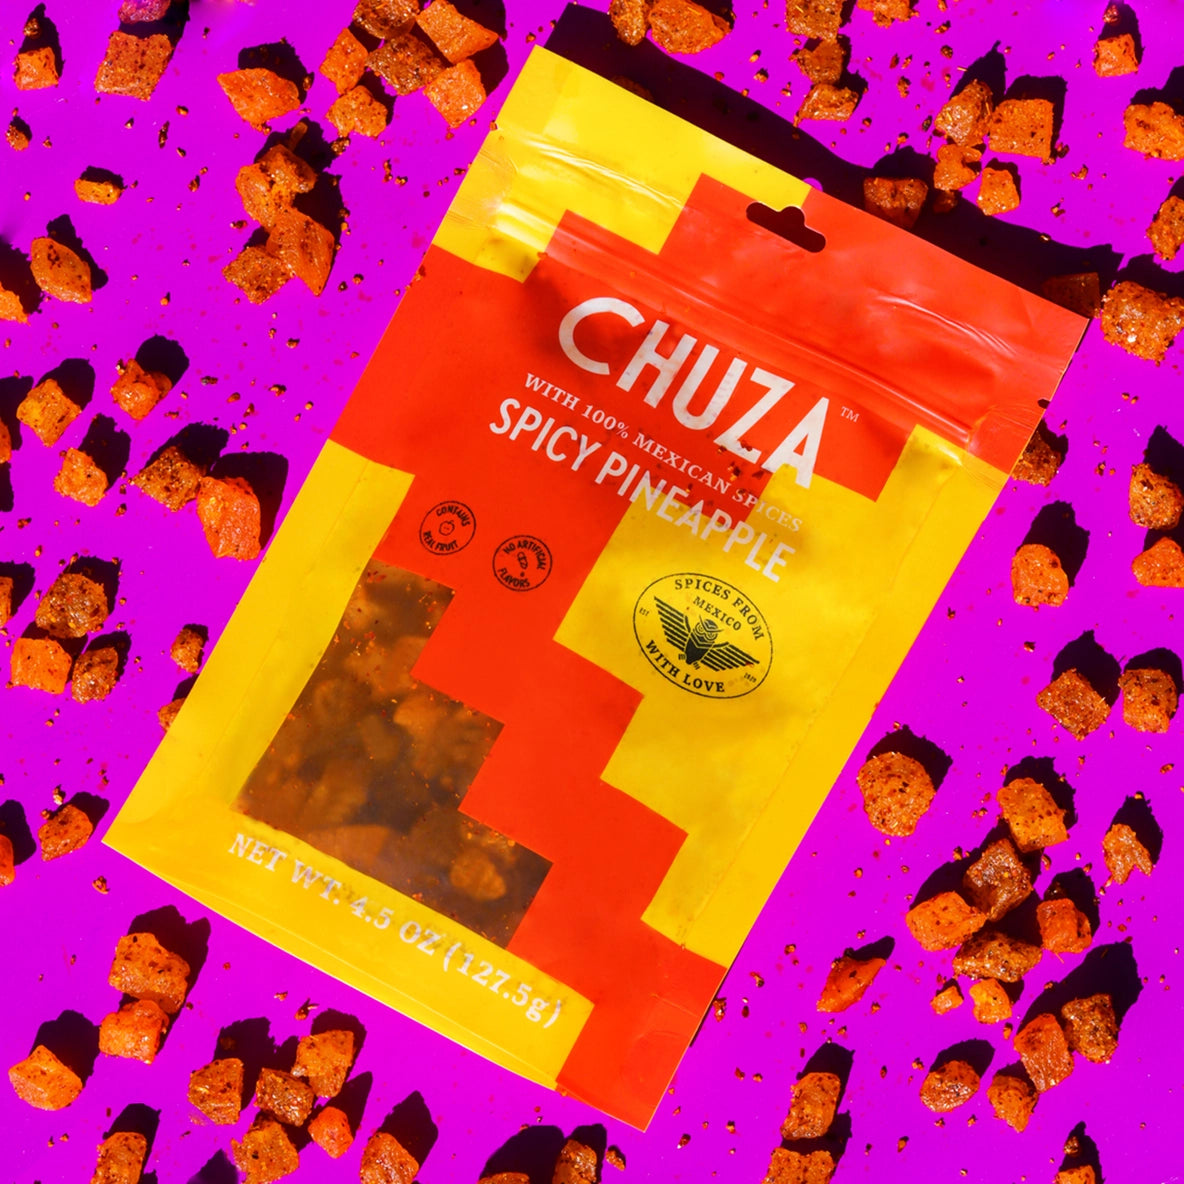 Chuza | Spicy Pineapple Snack (128g)